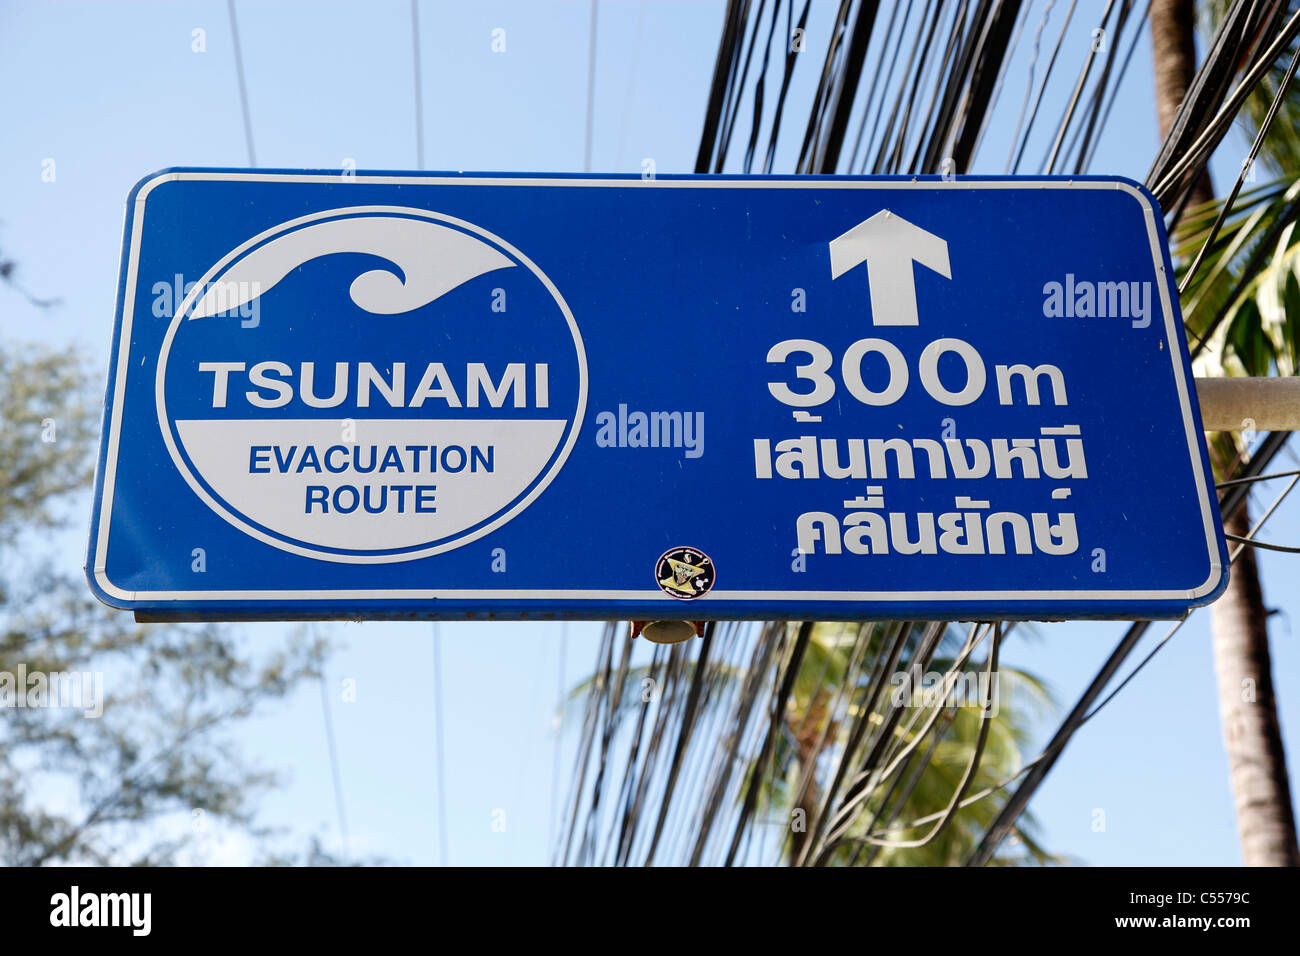 Tsunami evacuation route sign in Patong, Phuket, Thailand Stock Photo